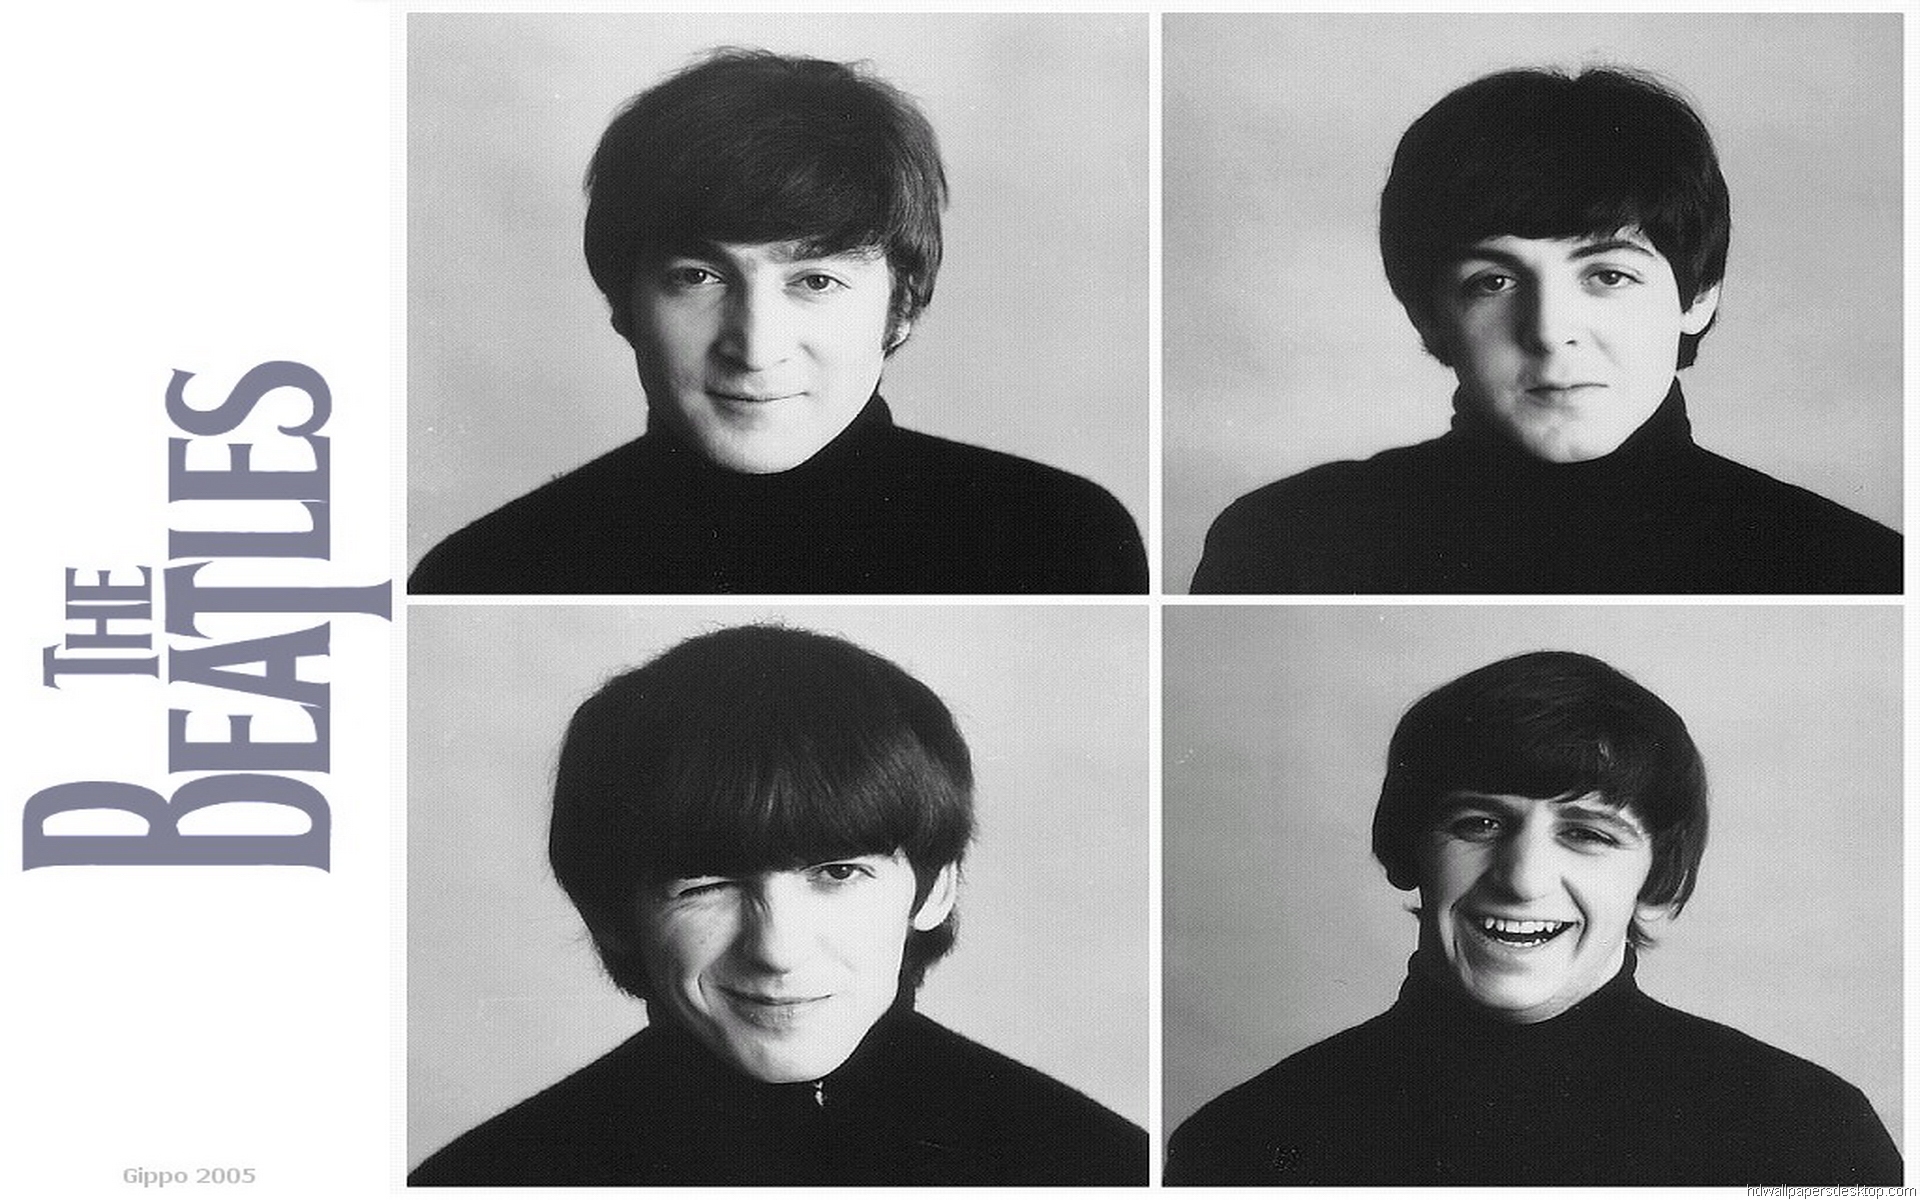 The Beatles Wallpaper Widescreen Background